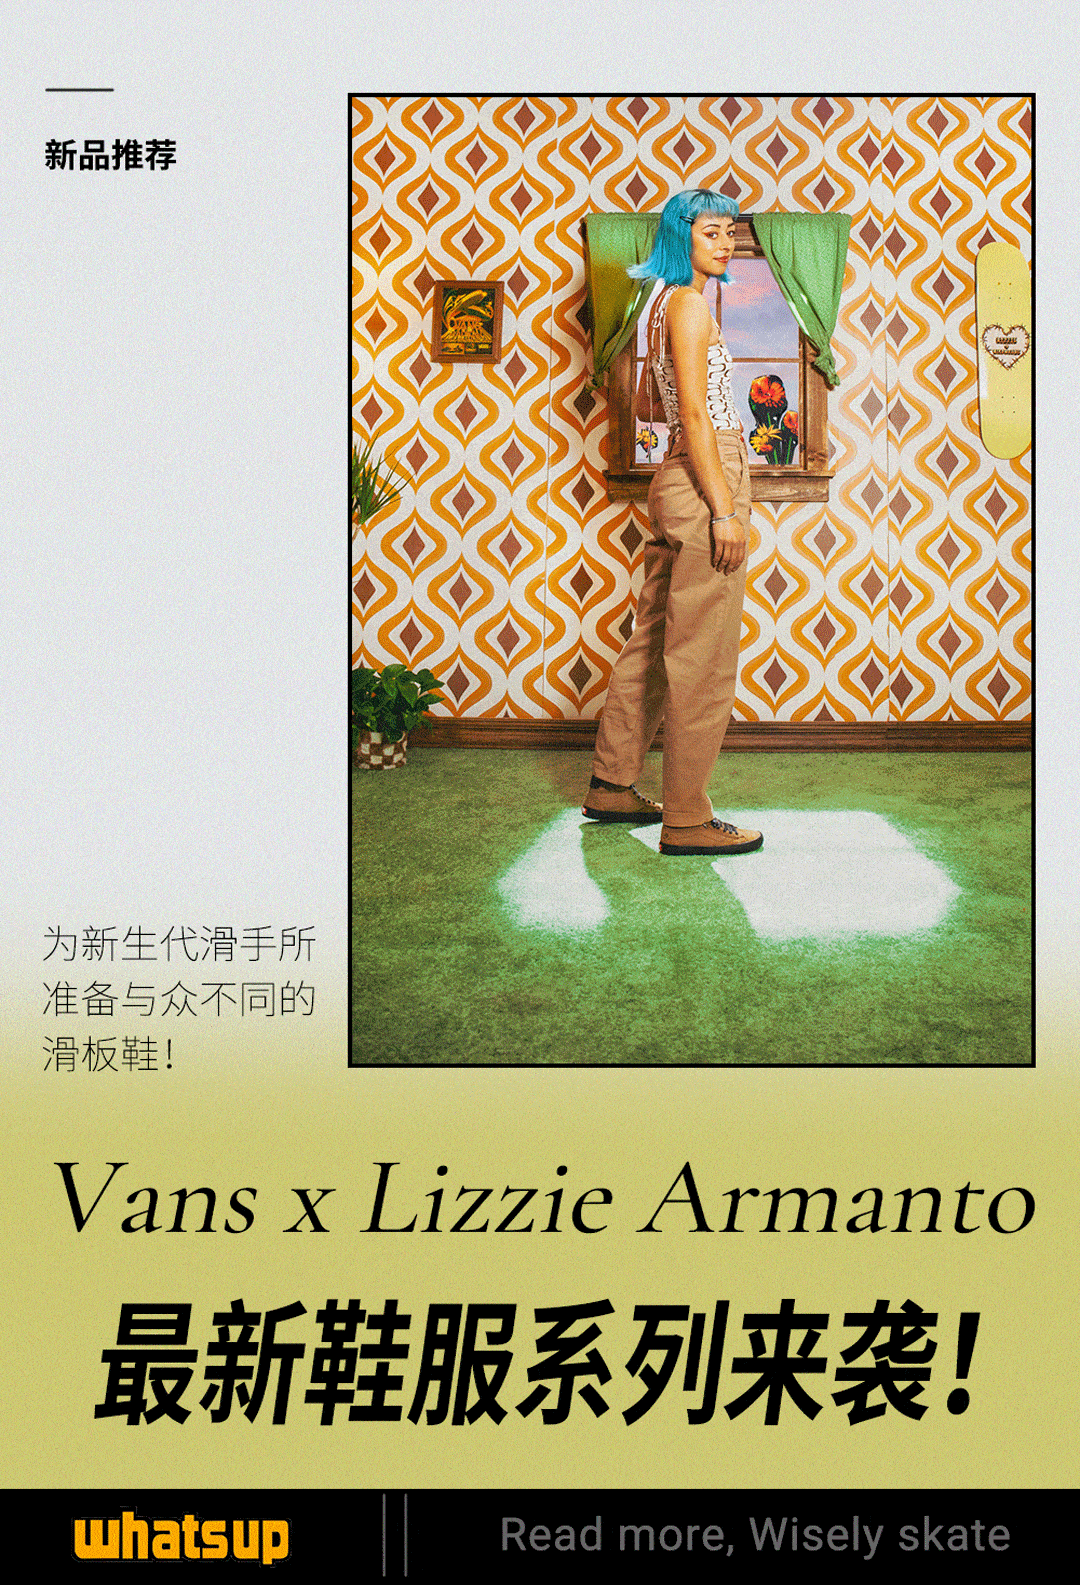 Lizzie Armanto 最新鞋服系列来袭！Vans 20 年来首次由女性设计的签名